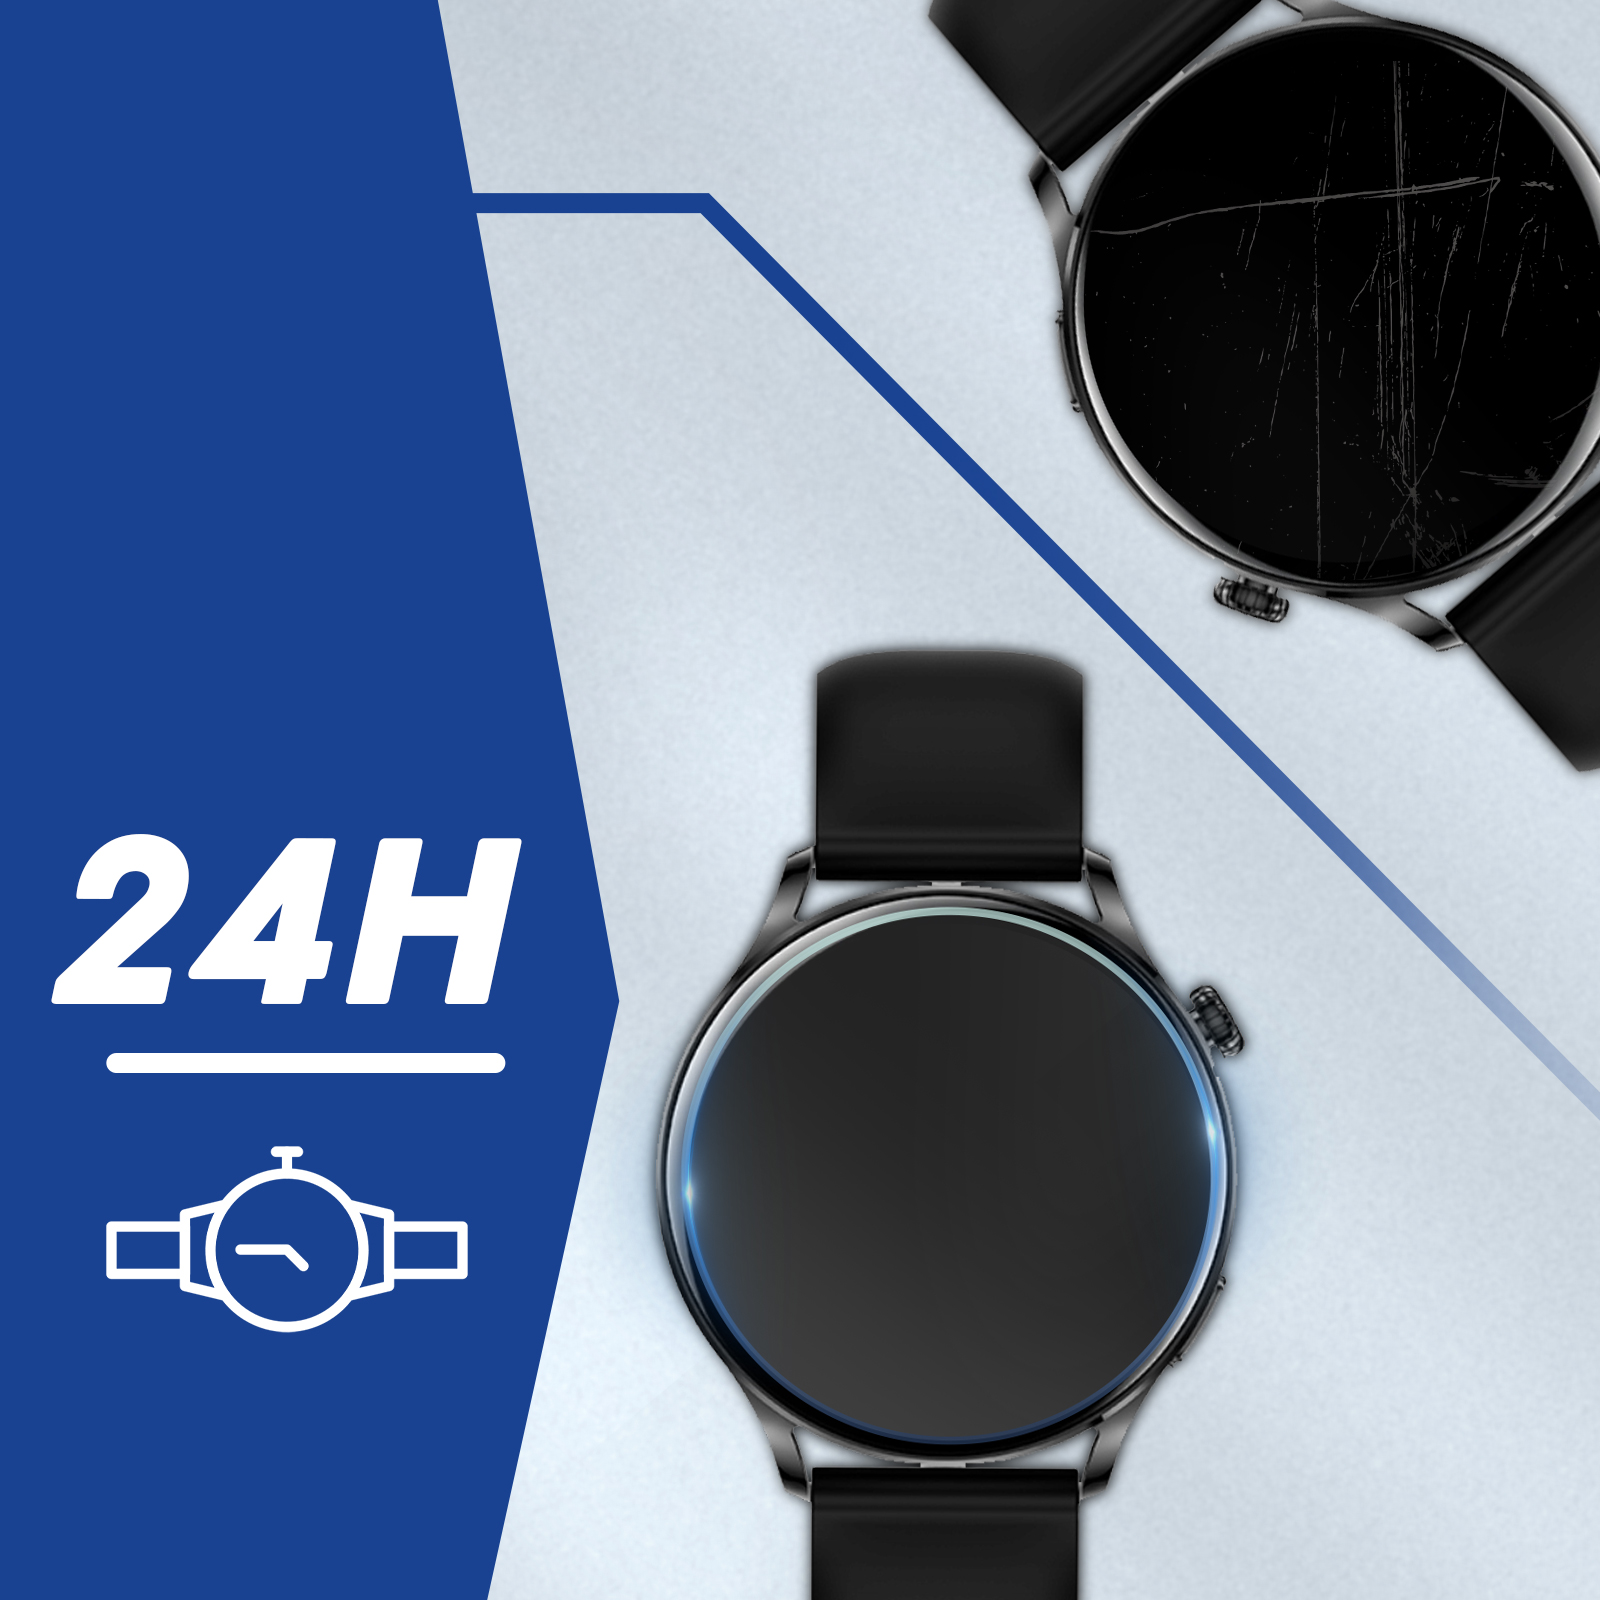 ARC+ Smartwatch v. Smartwatch Watch Rubicon RNCE81) RNCE81 Glas(für Smartwatch Protection Rubicon 3MK 3mk -